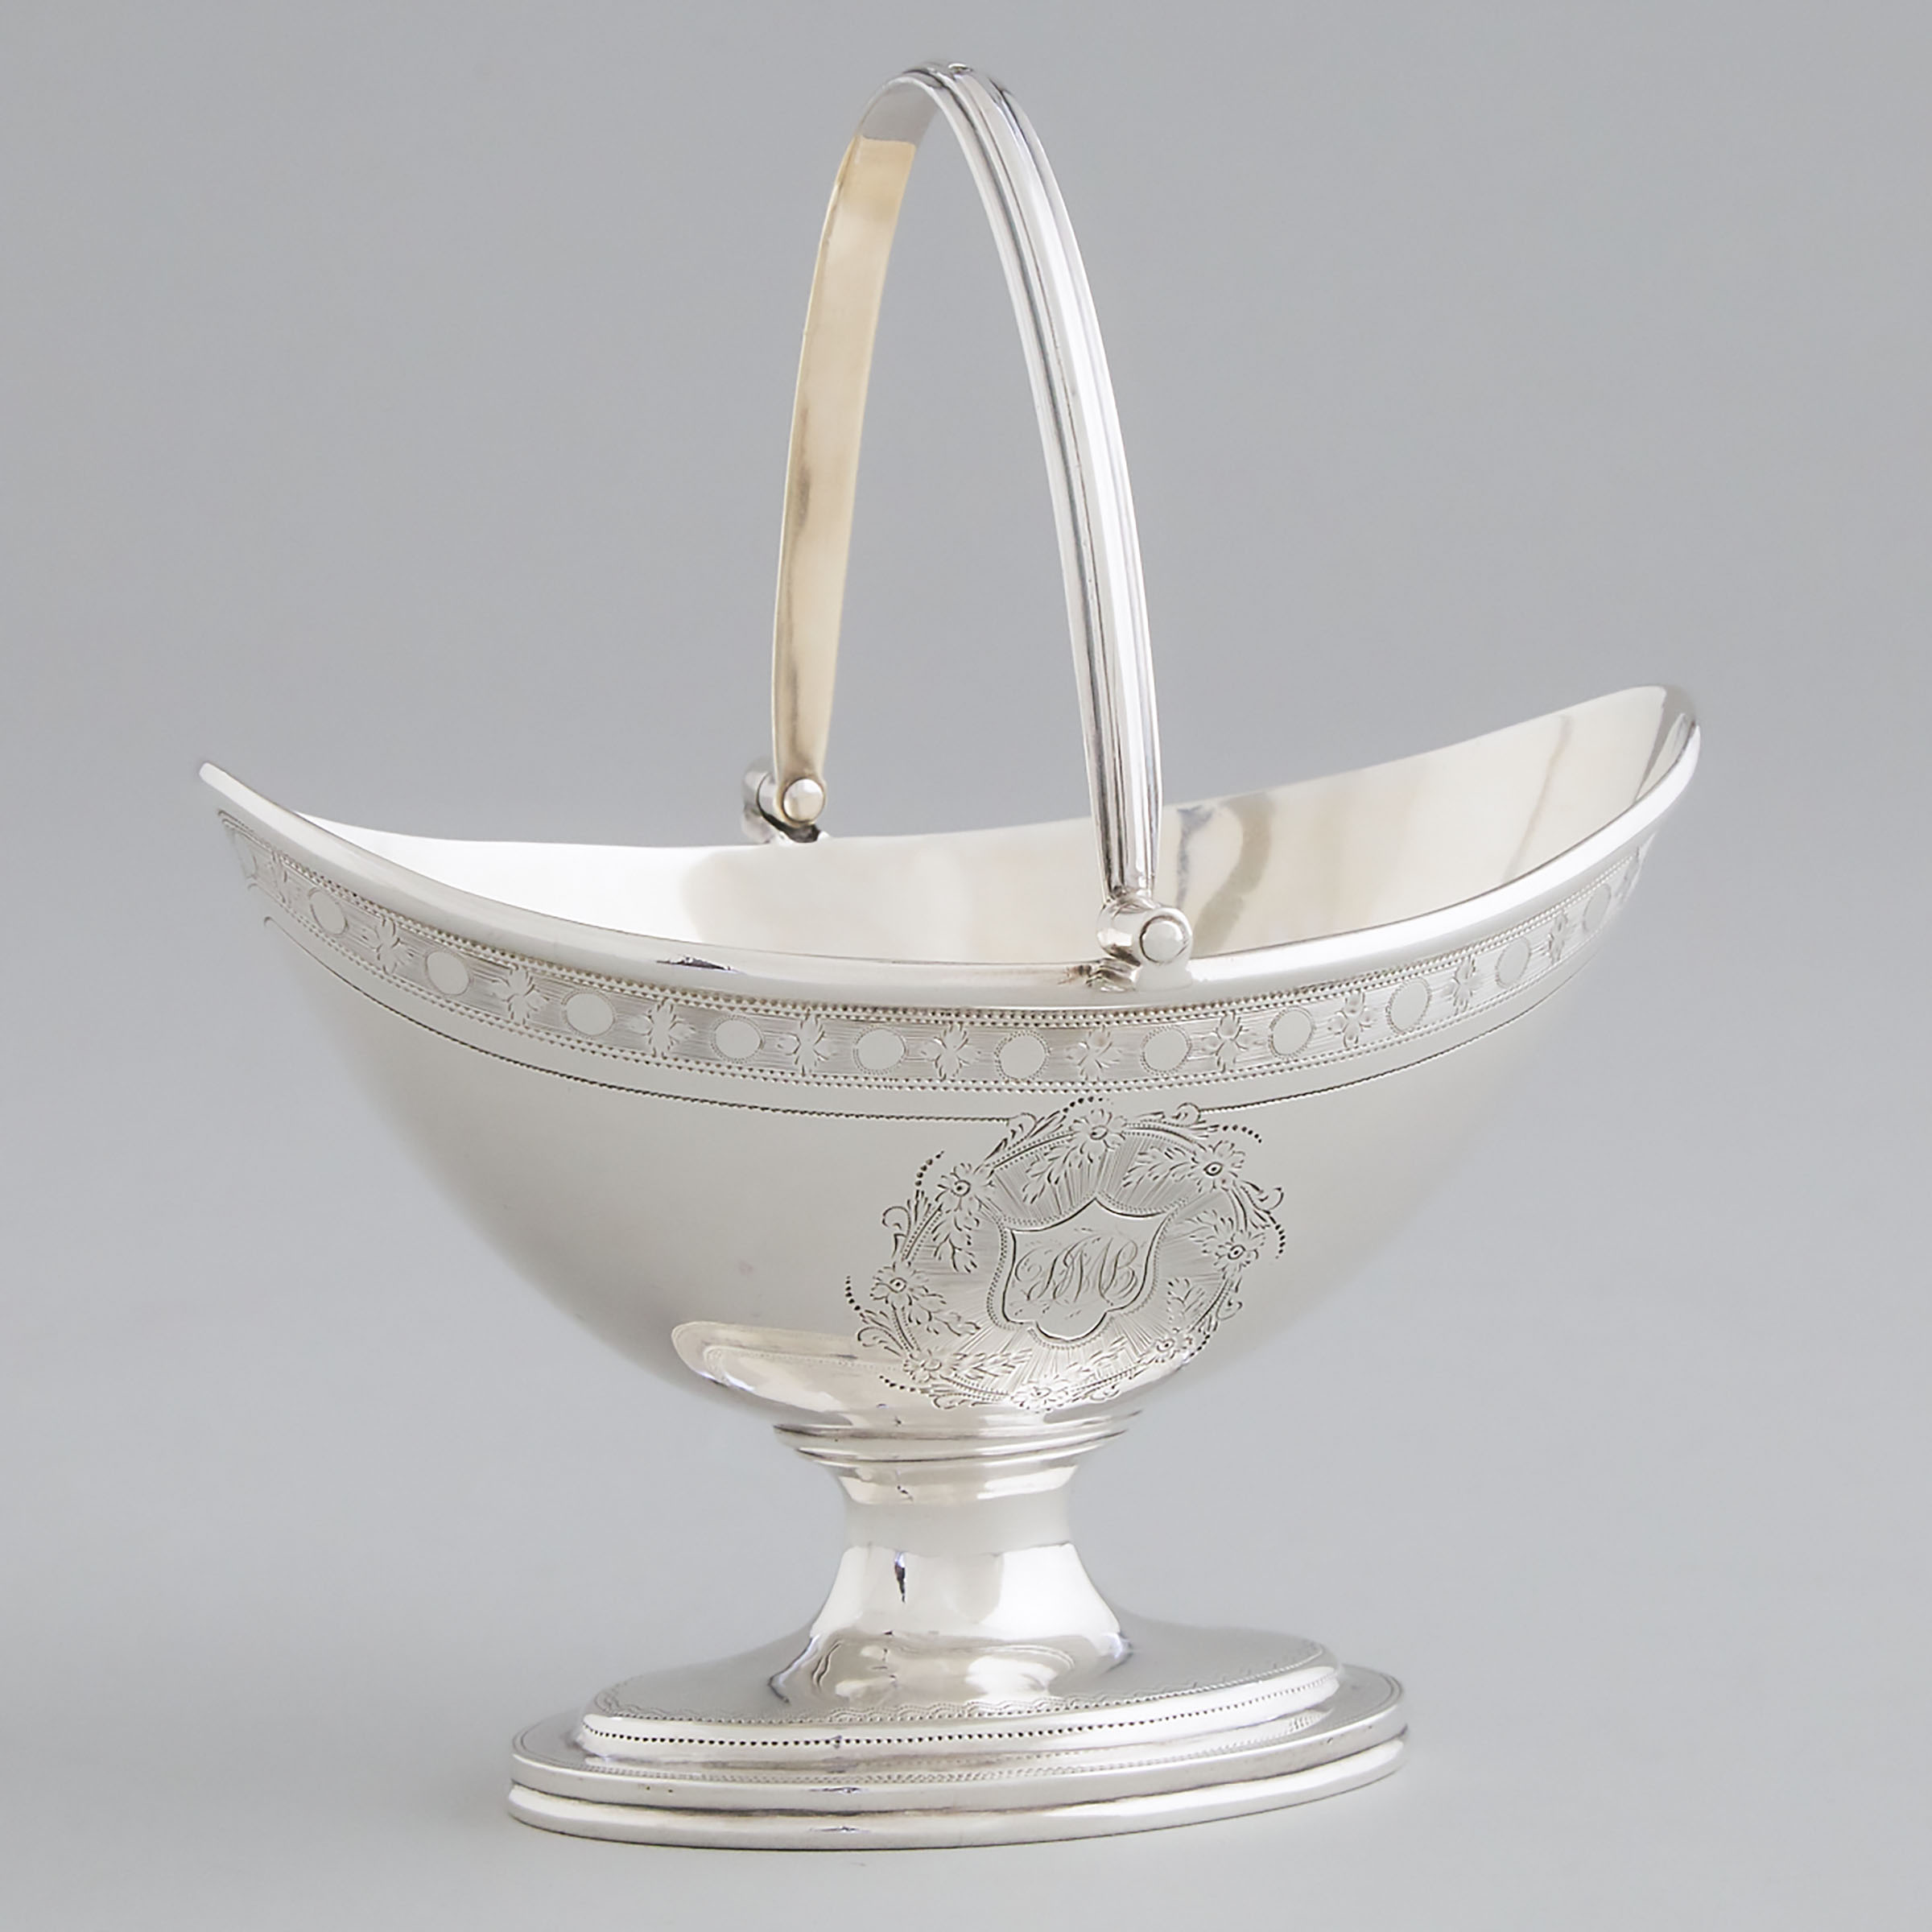 George III Silver Oval Sugar Basket, Samuel Godbehere & Edward Wigan, London, 1798